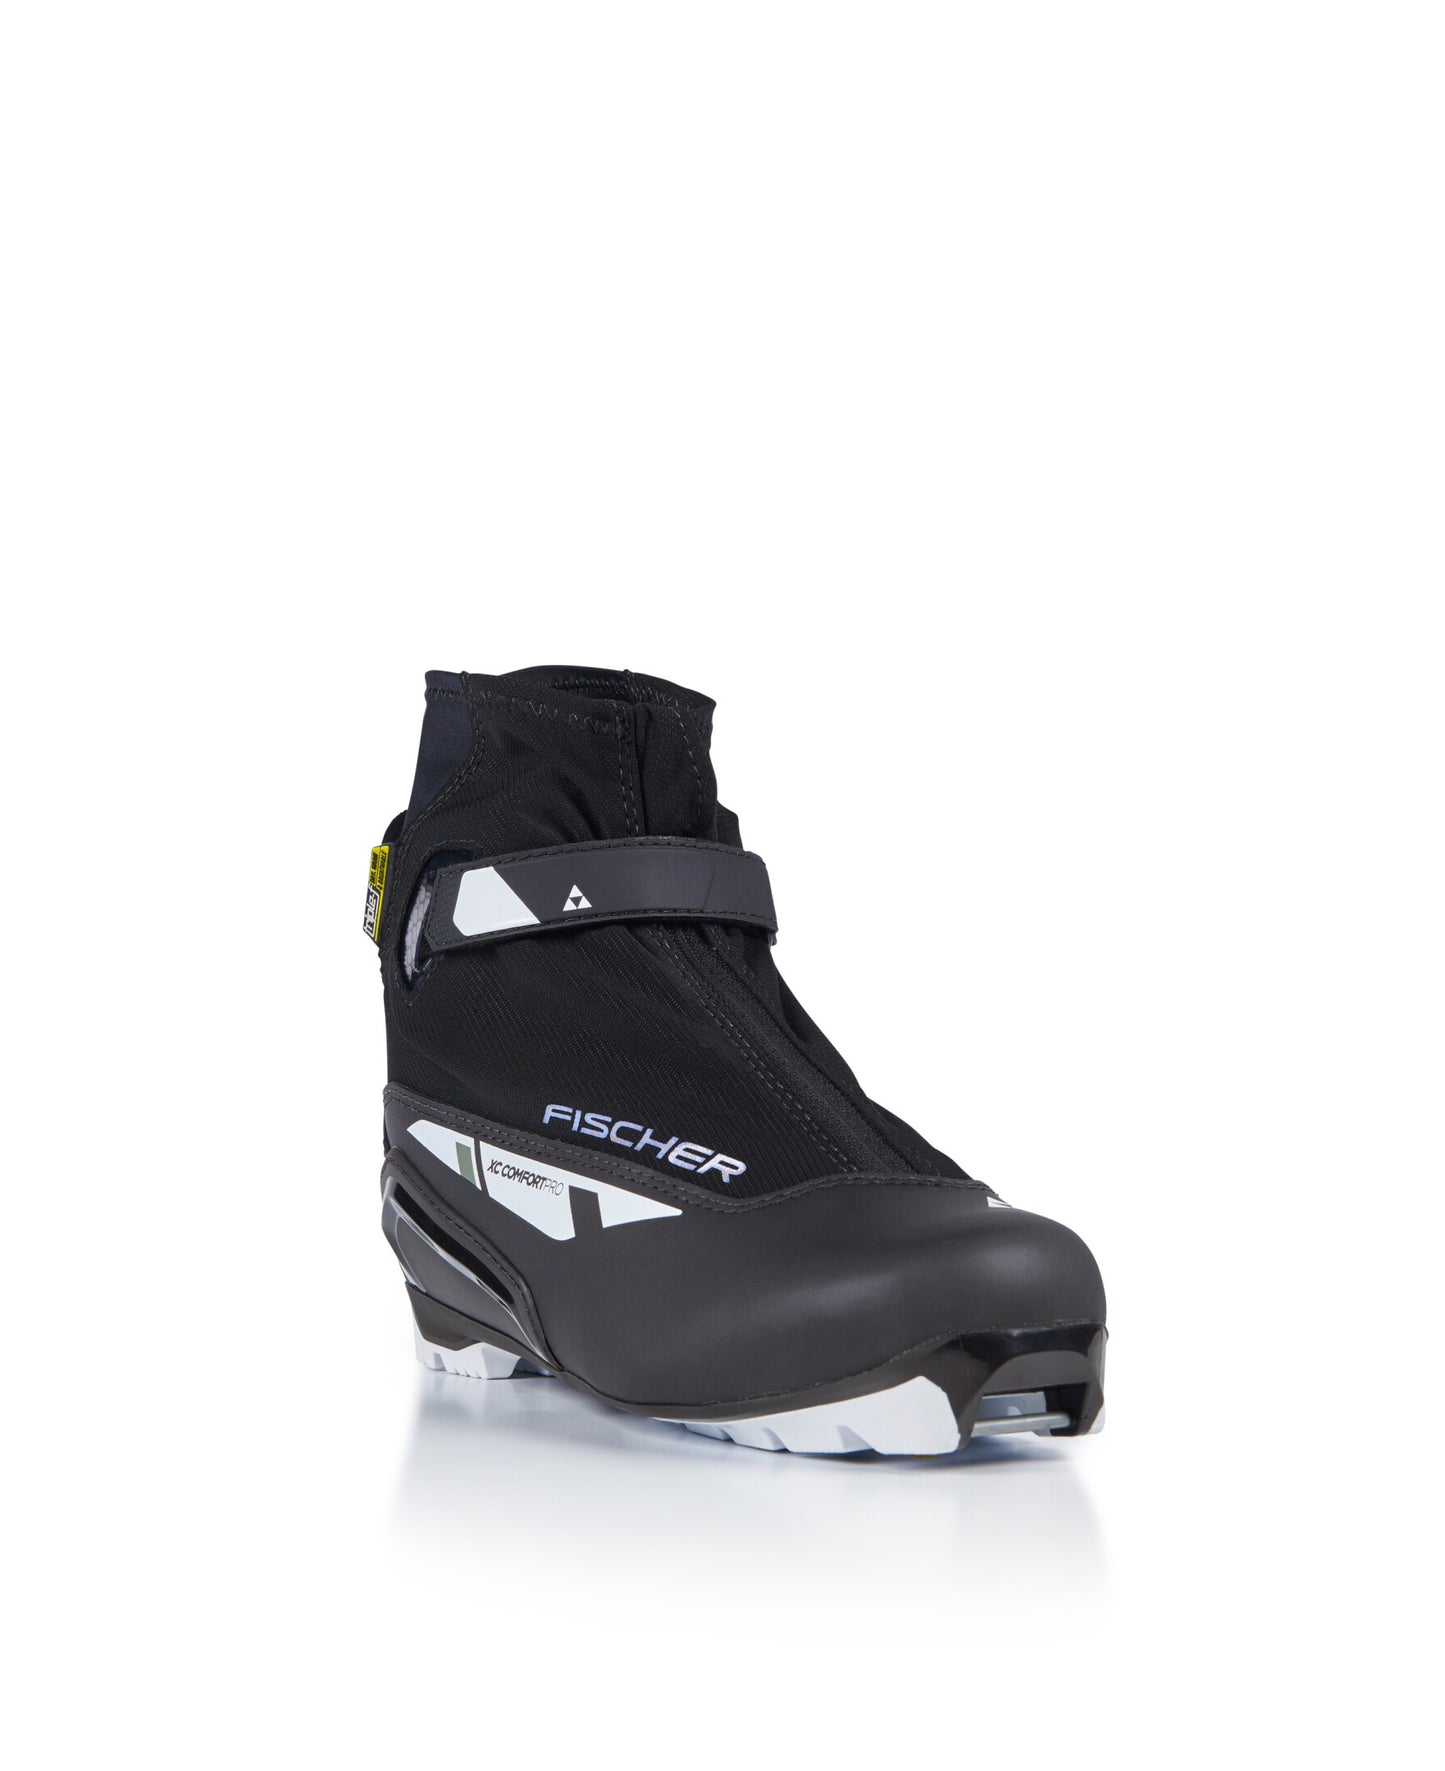 Chaussures de ski nordique Fischer XC Comfort Pro